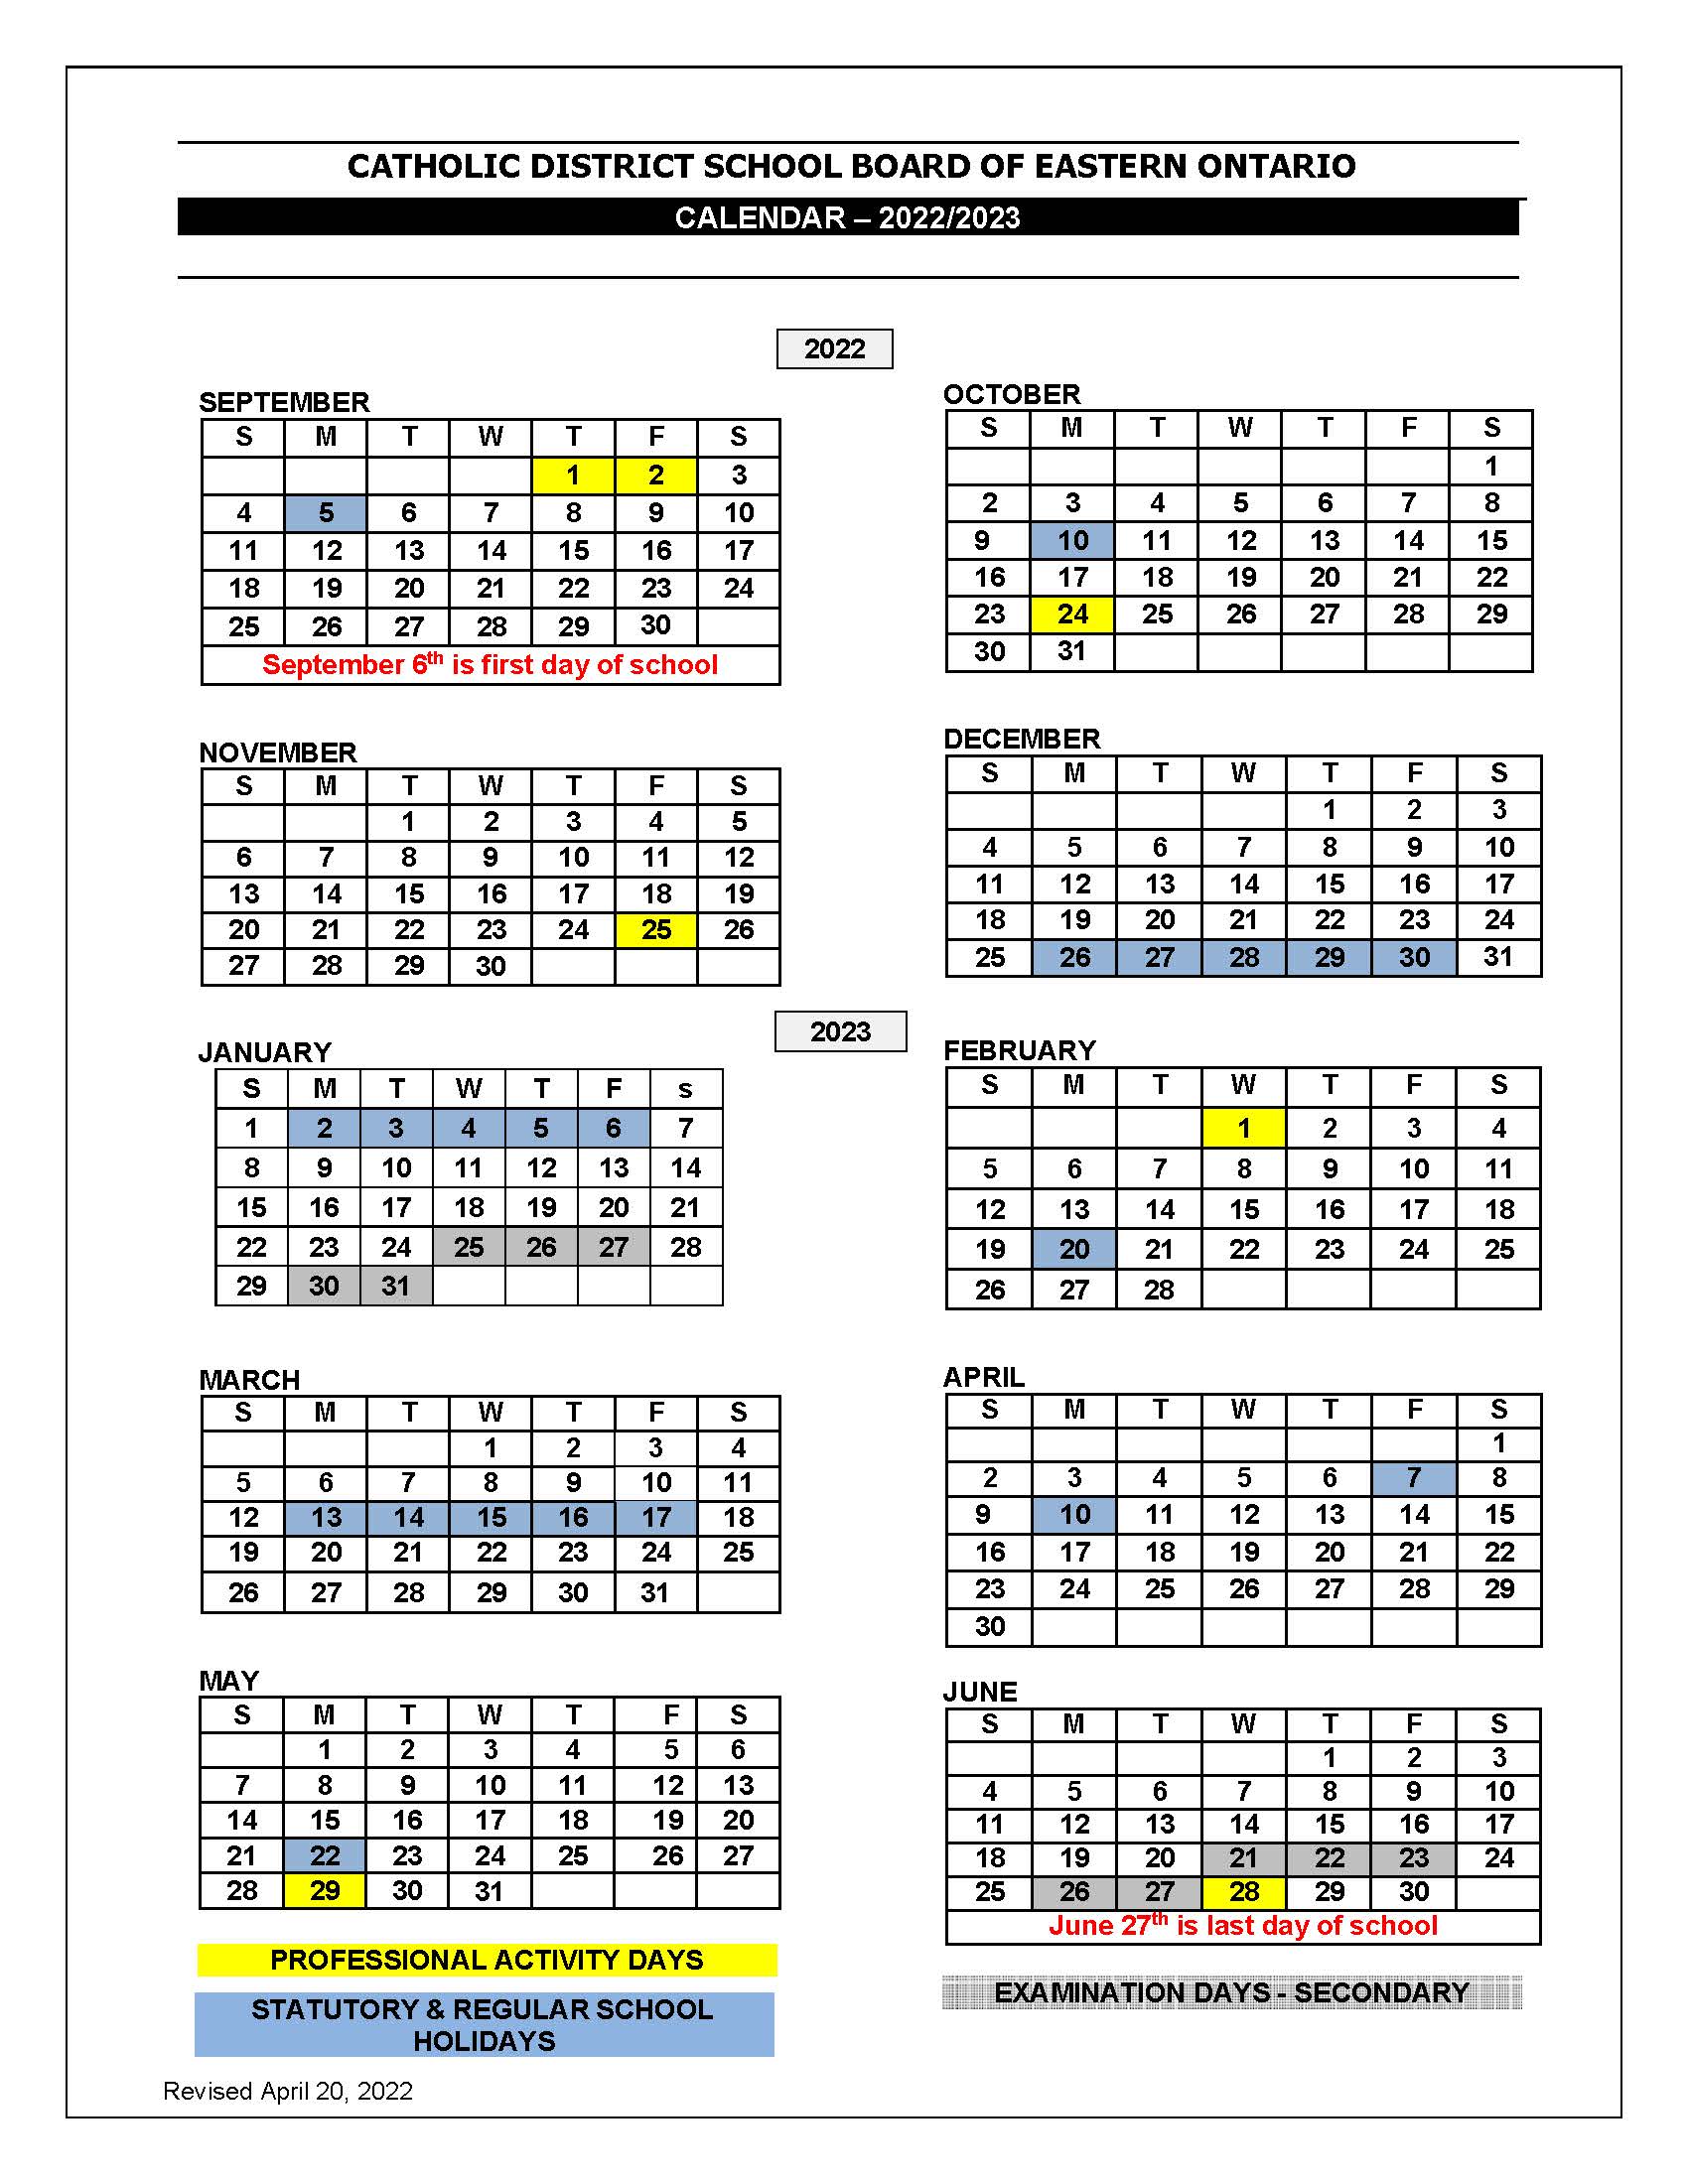 School Calendars – Student Transportation of Eastern Ontario